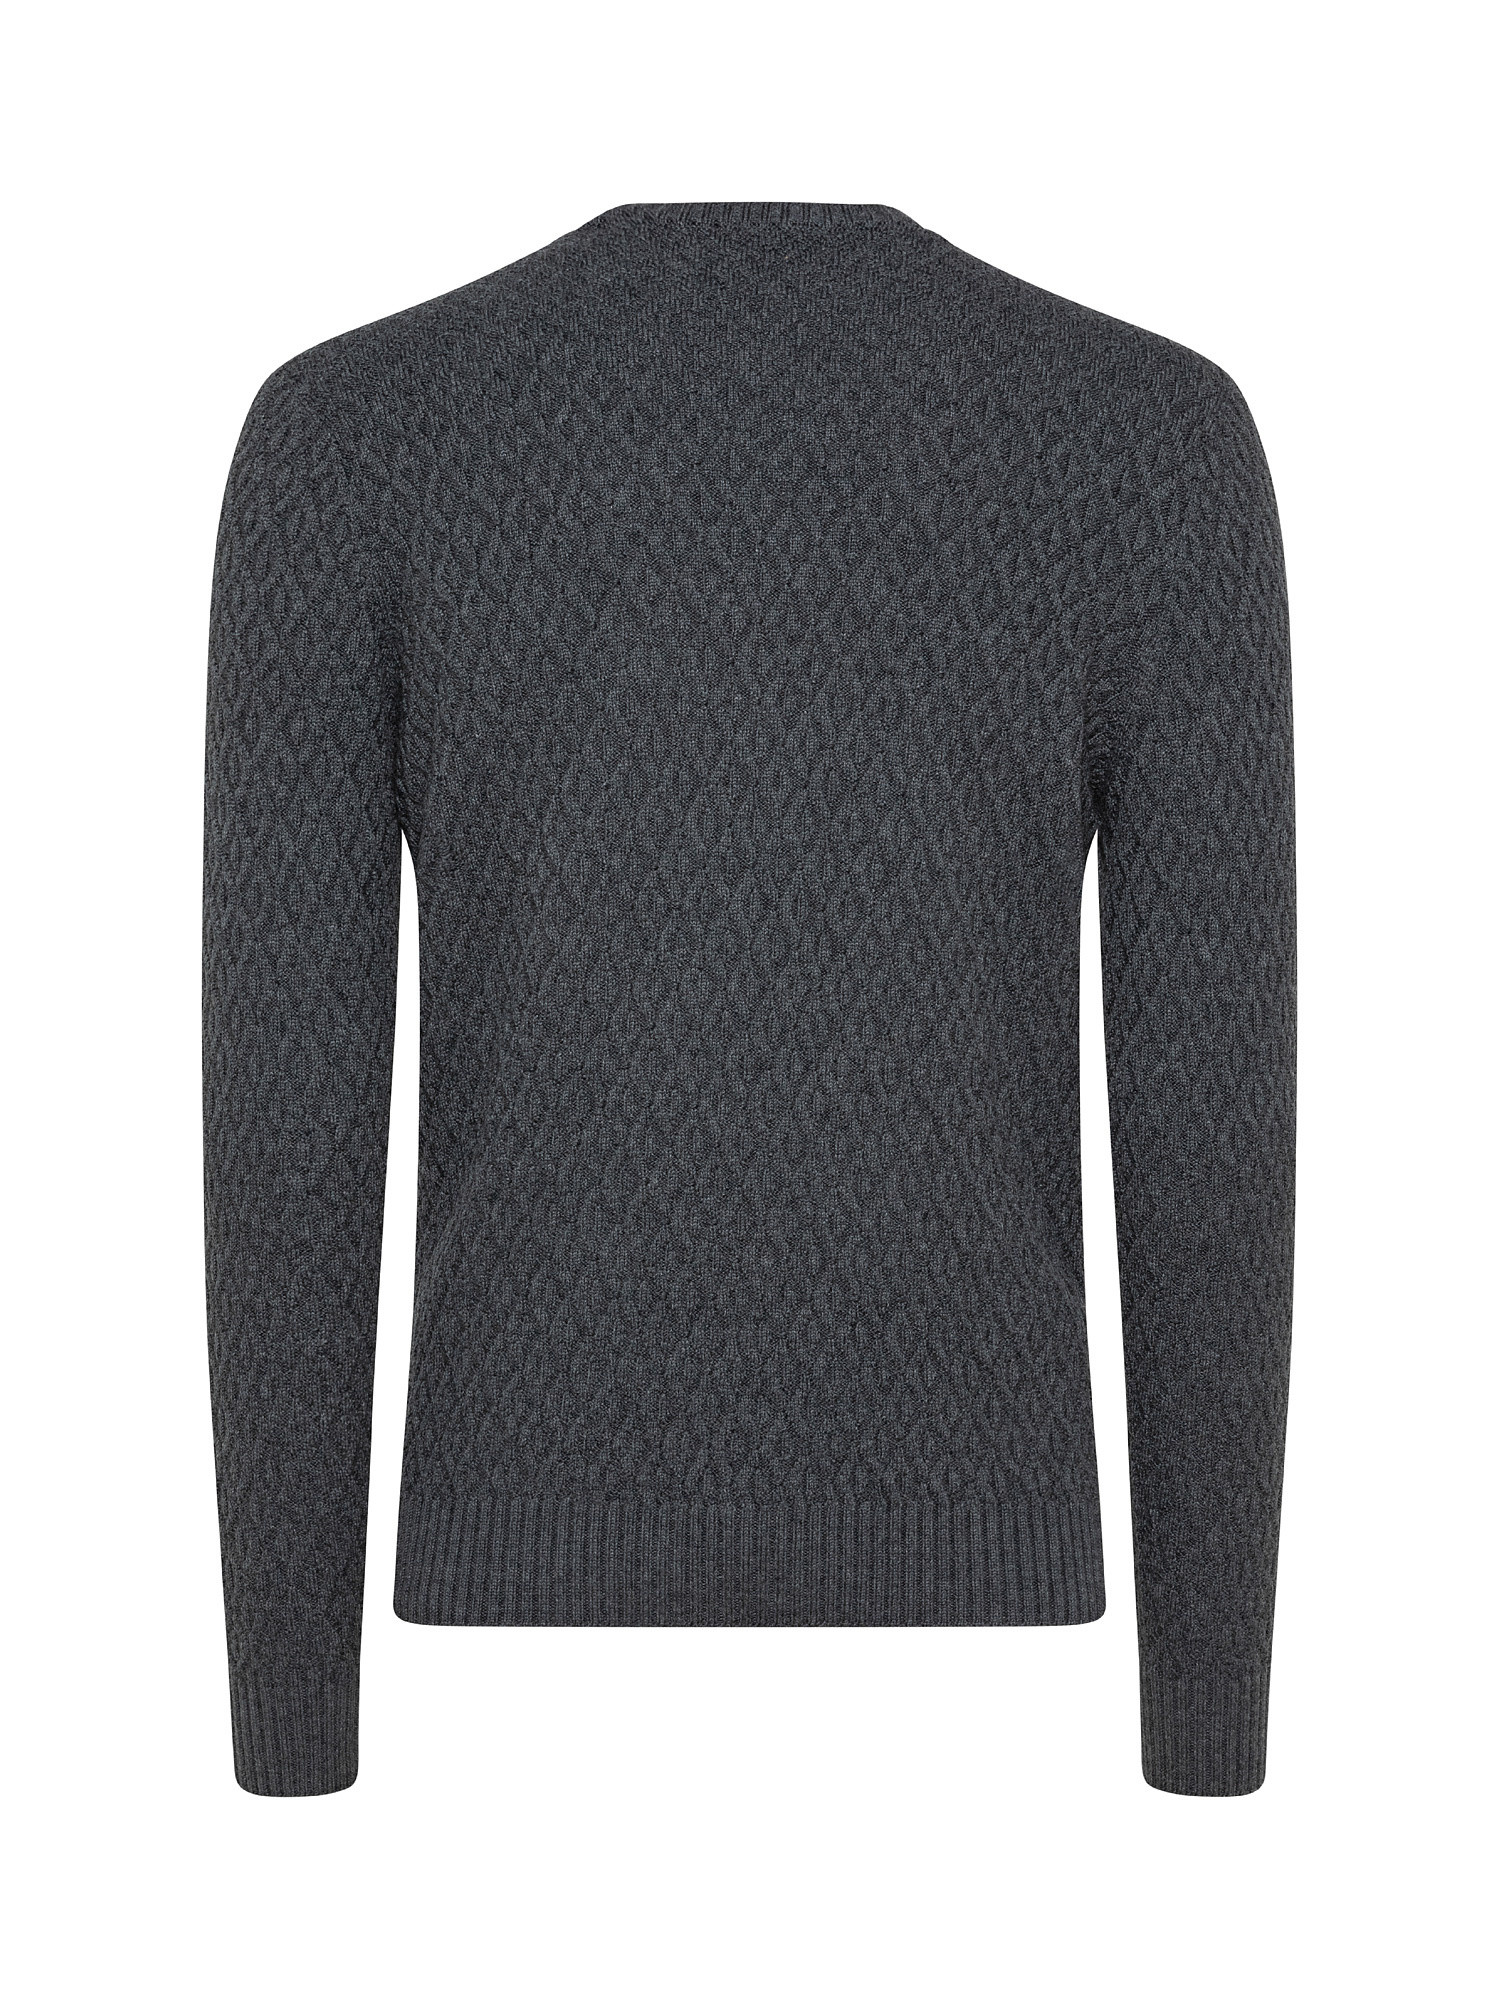 Long sleeve crewneck sweater, Grey, large image number 1